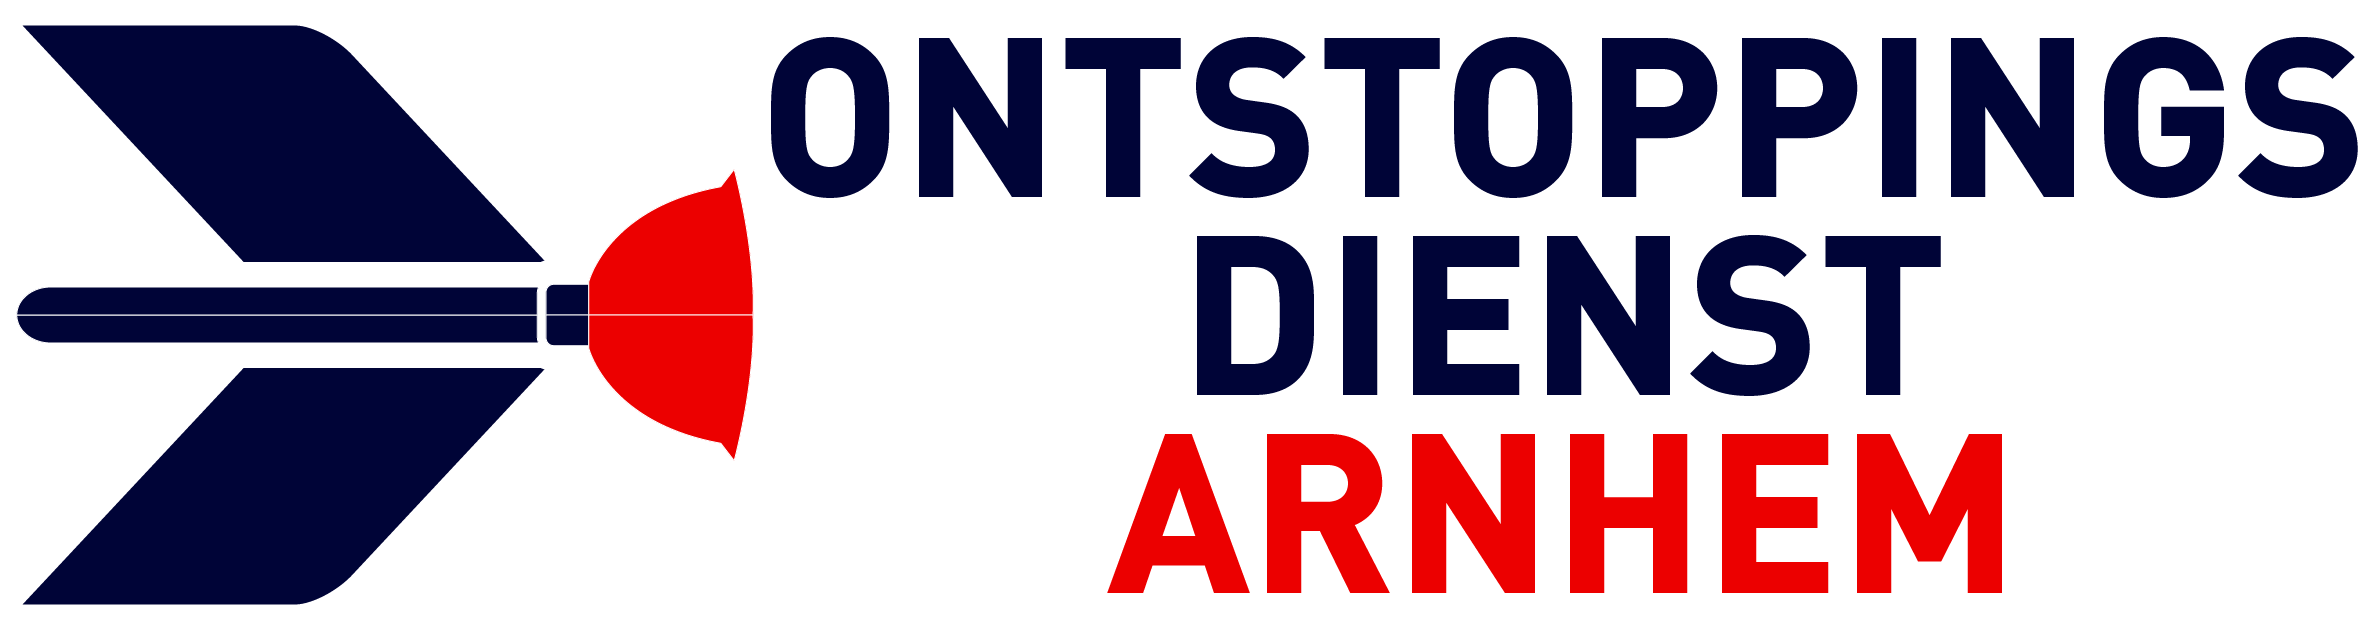 Ontstoppingsdienst Arnhem logo